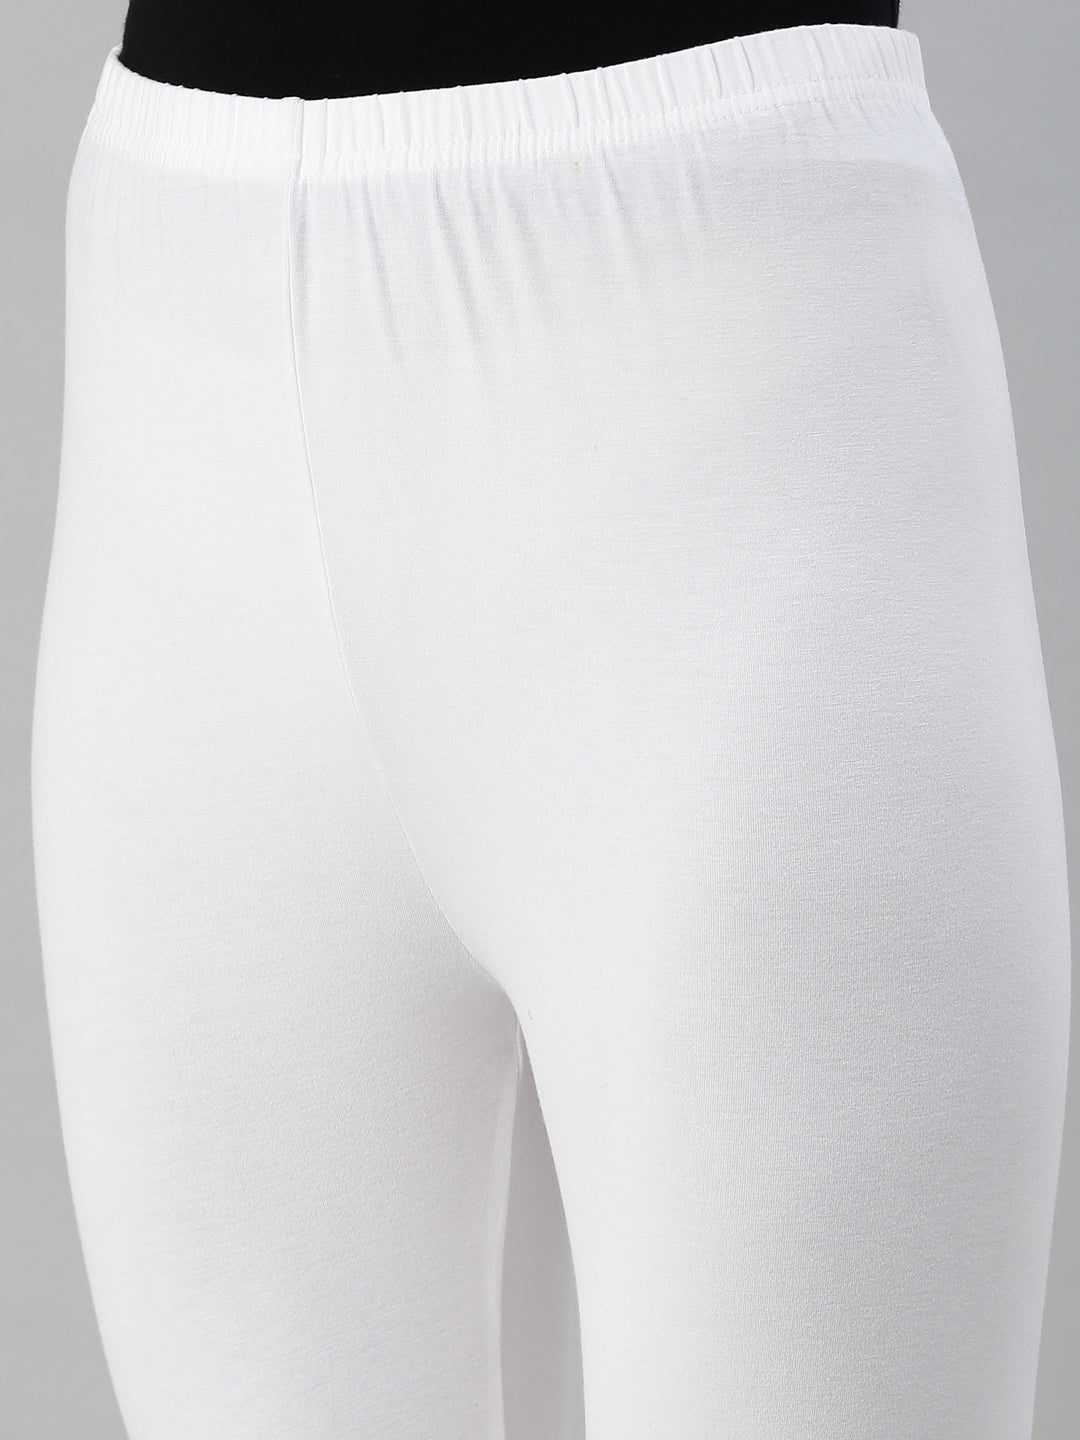 Buy prisma leggings white in India @ Limeroad